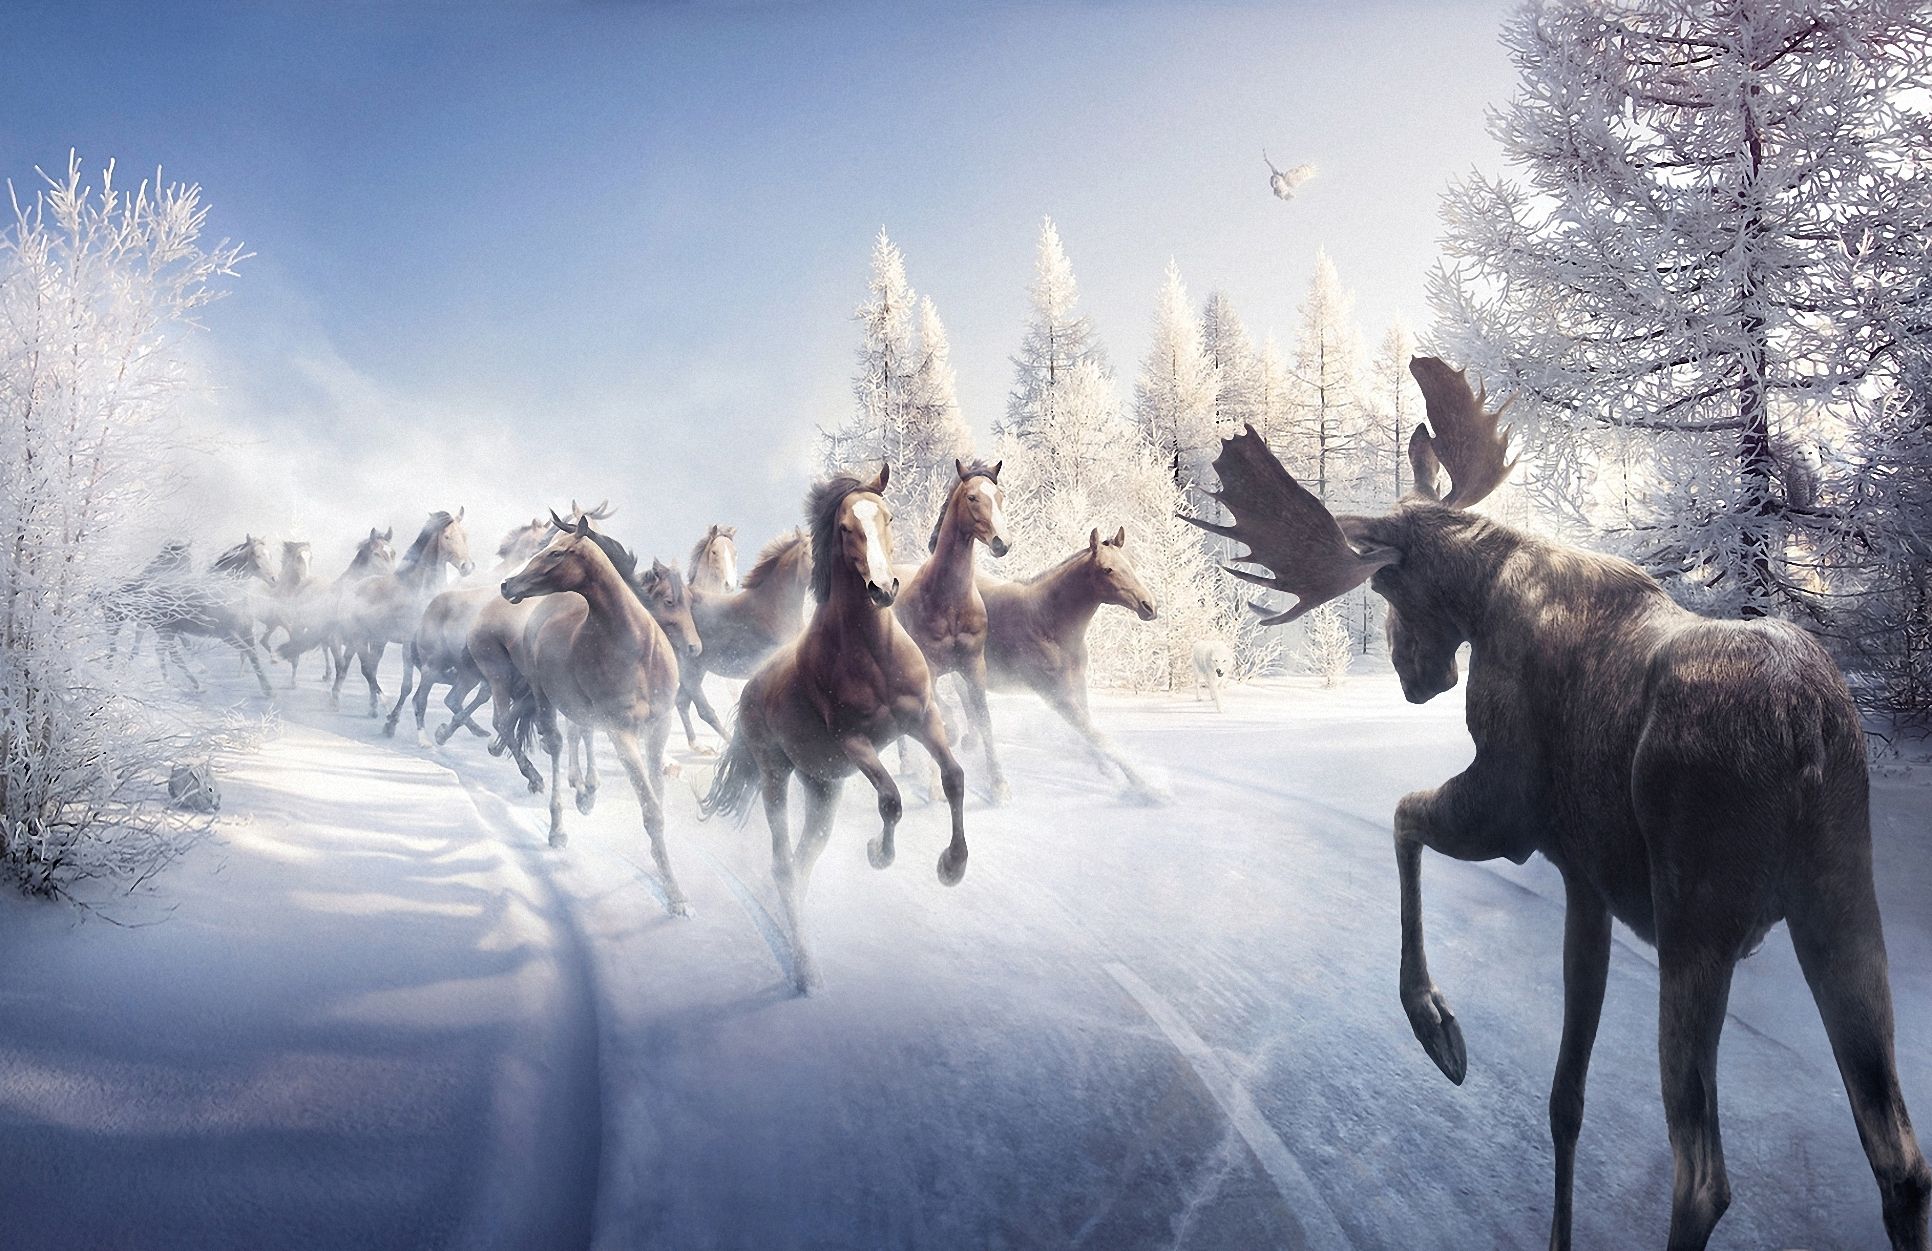 Battle animals art paintings nature landscapes winter snow trees horses moose wallpaperx1251